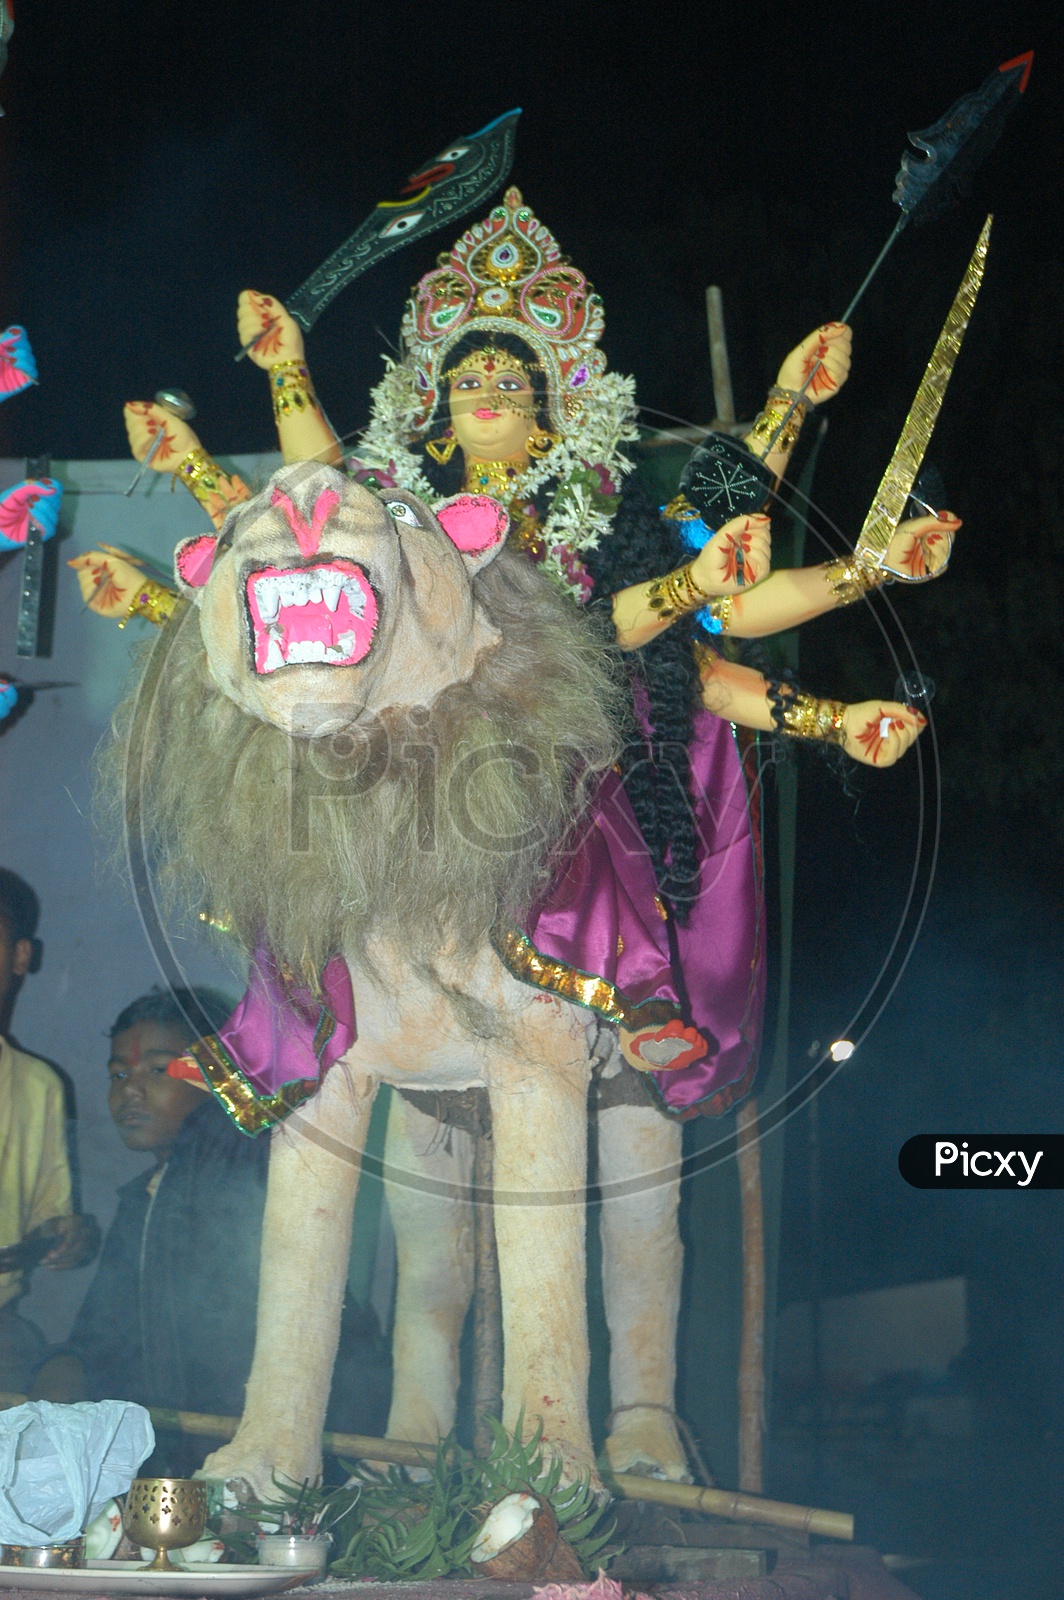 Hindu Goddess statue during the worship